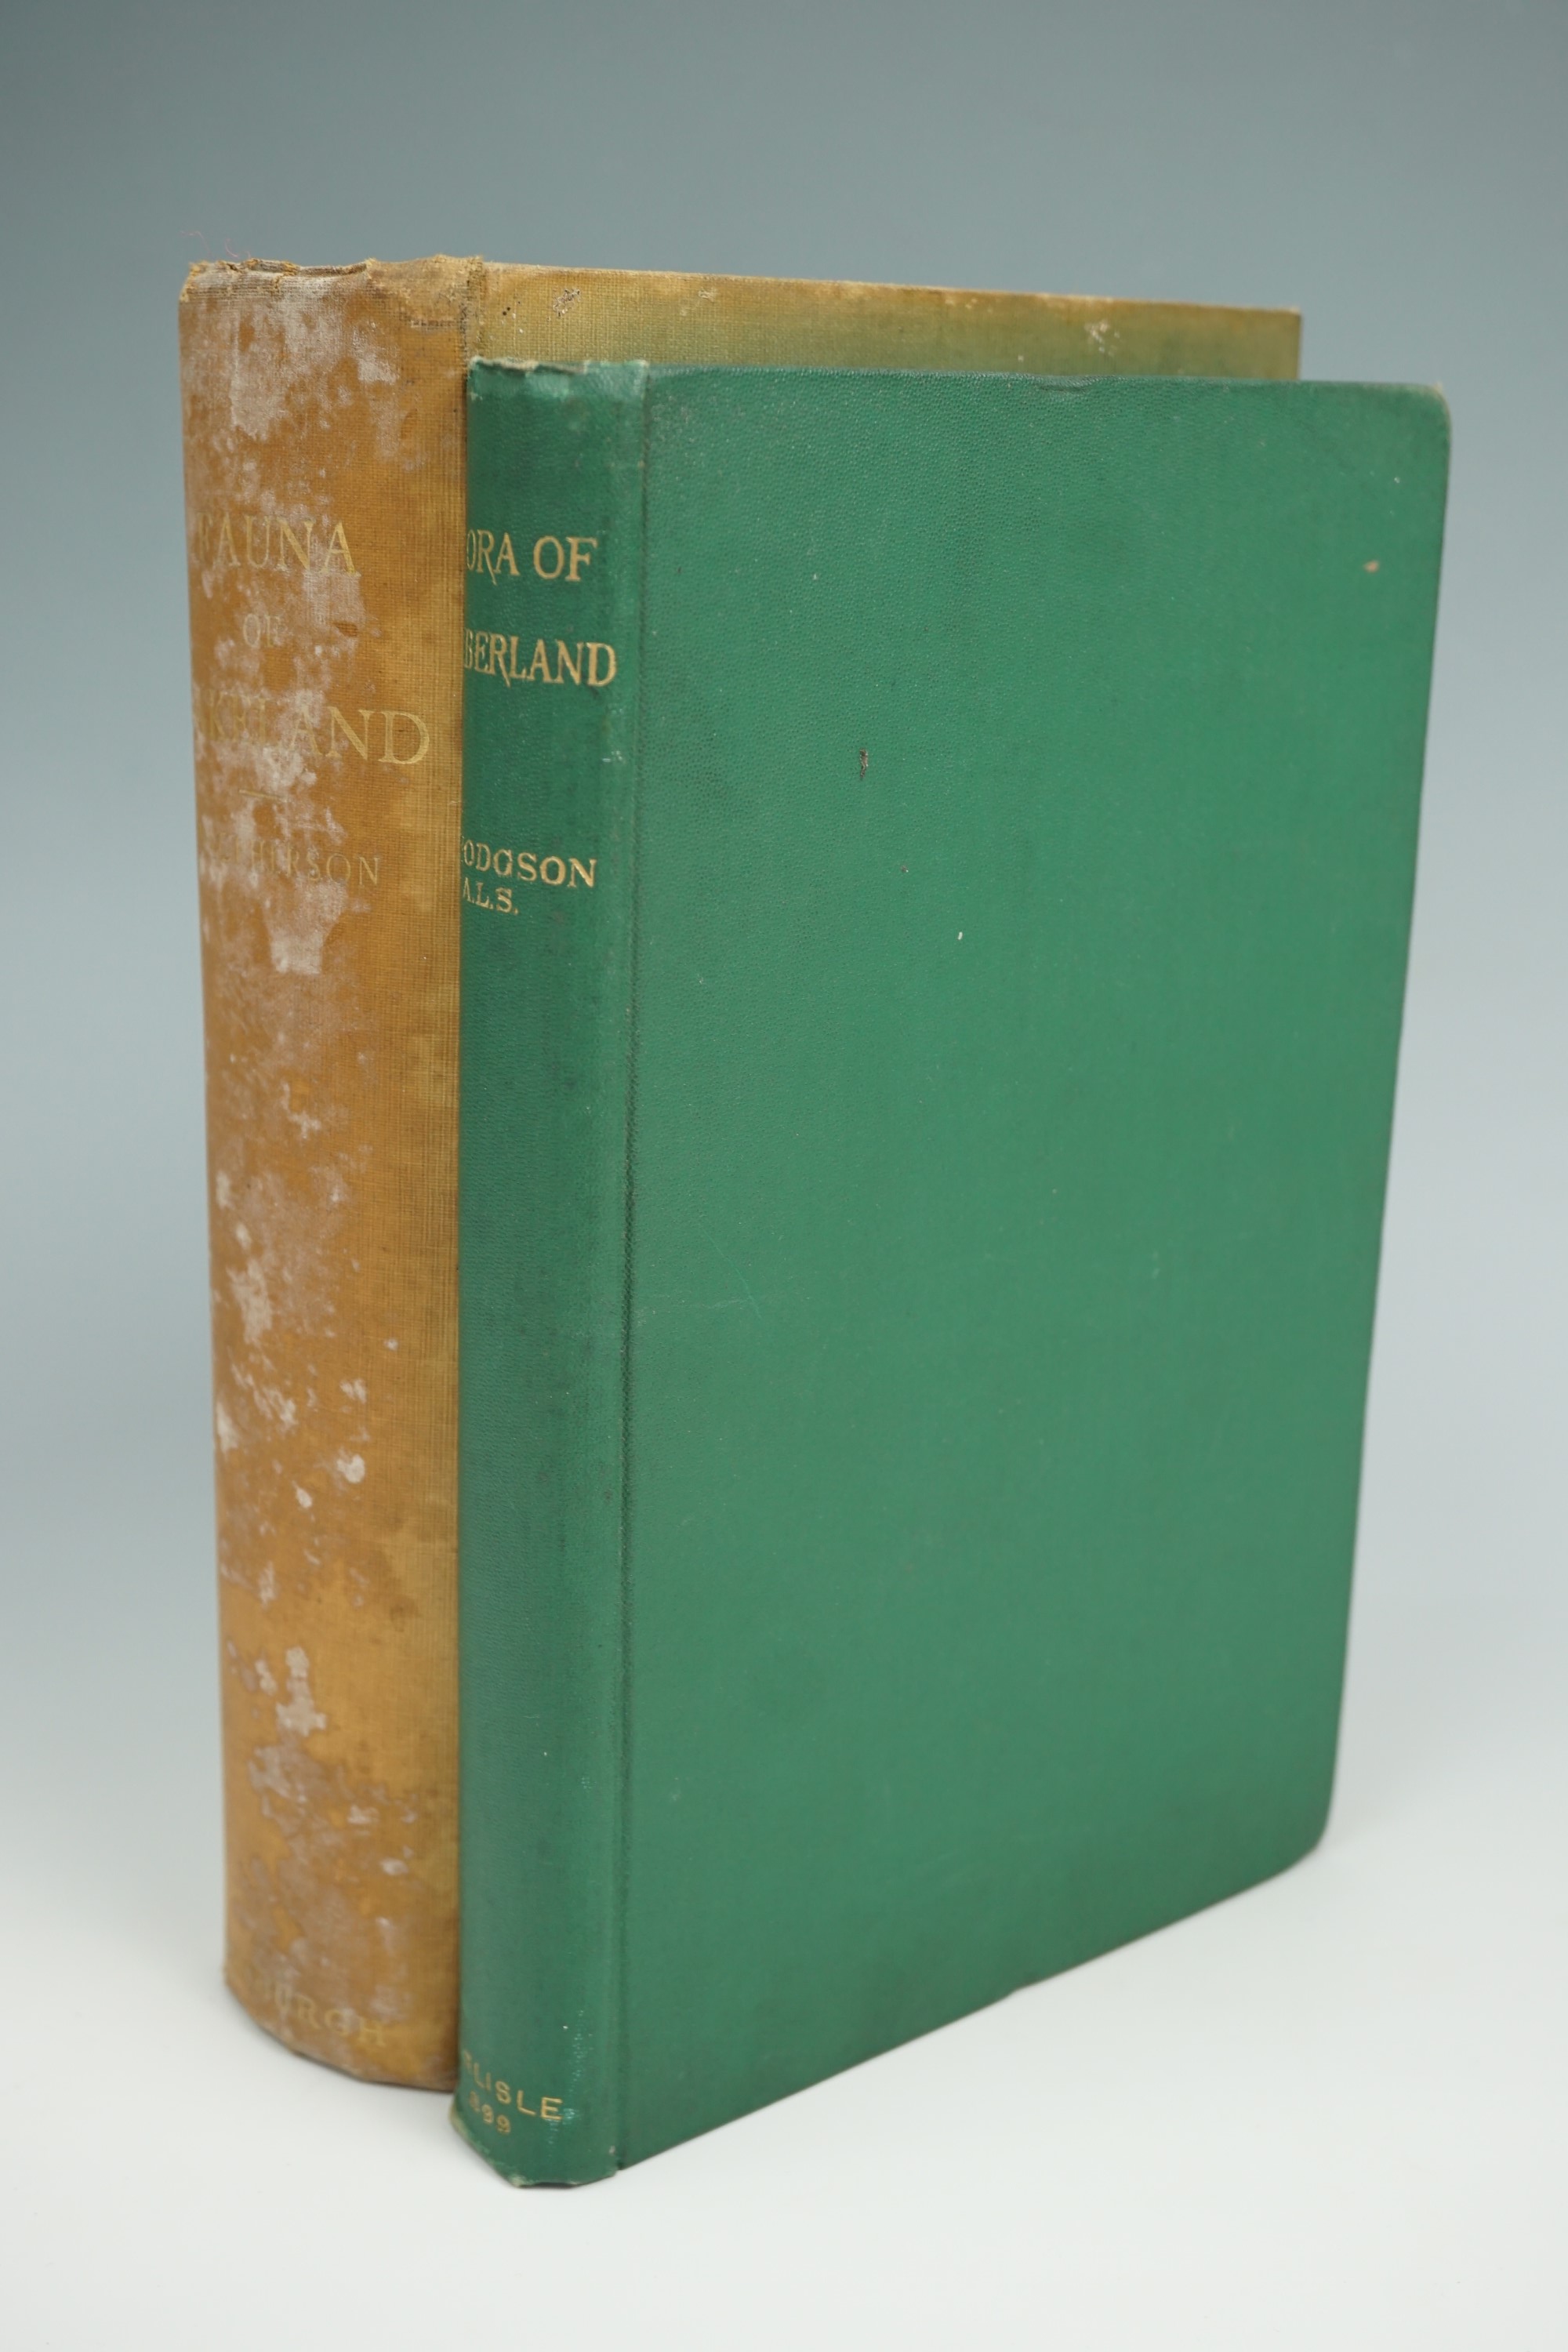 Rev H A Macpherson, "A Vertebrate Fauna of Lakeland", Edinburgh, David Douglas, 1892, together